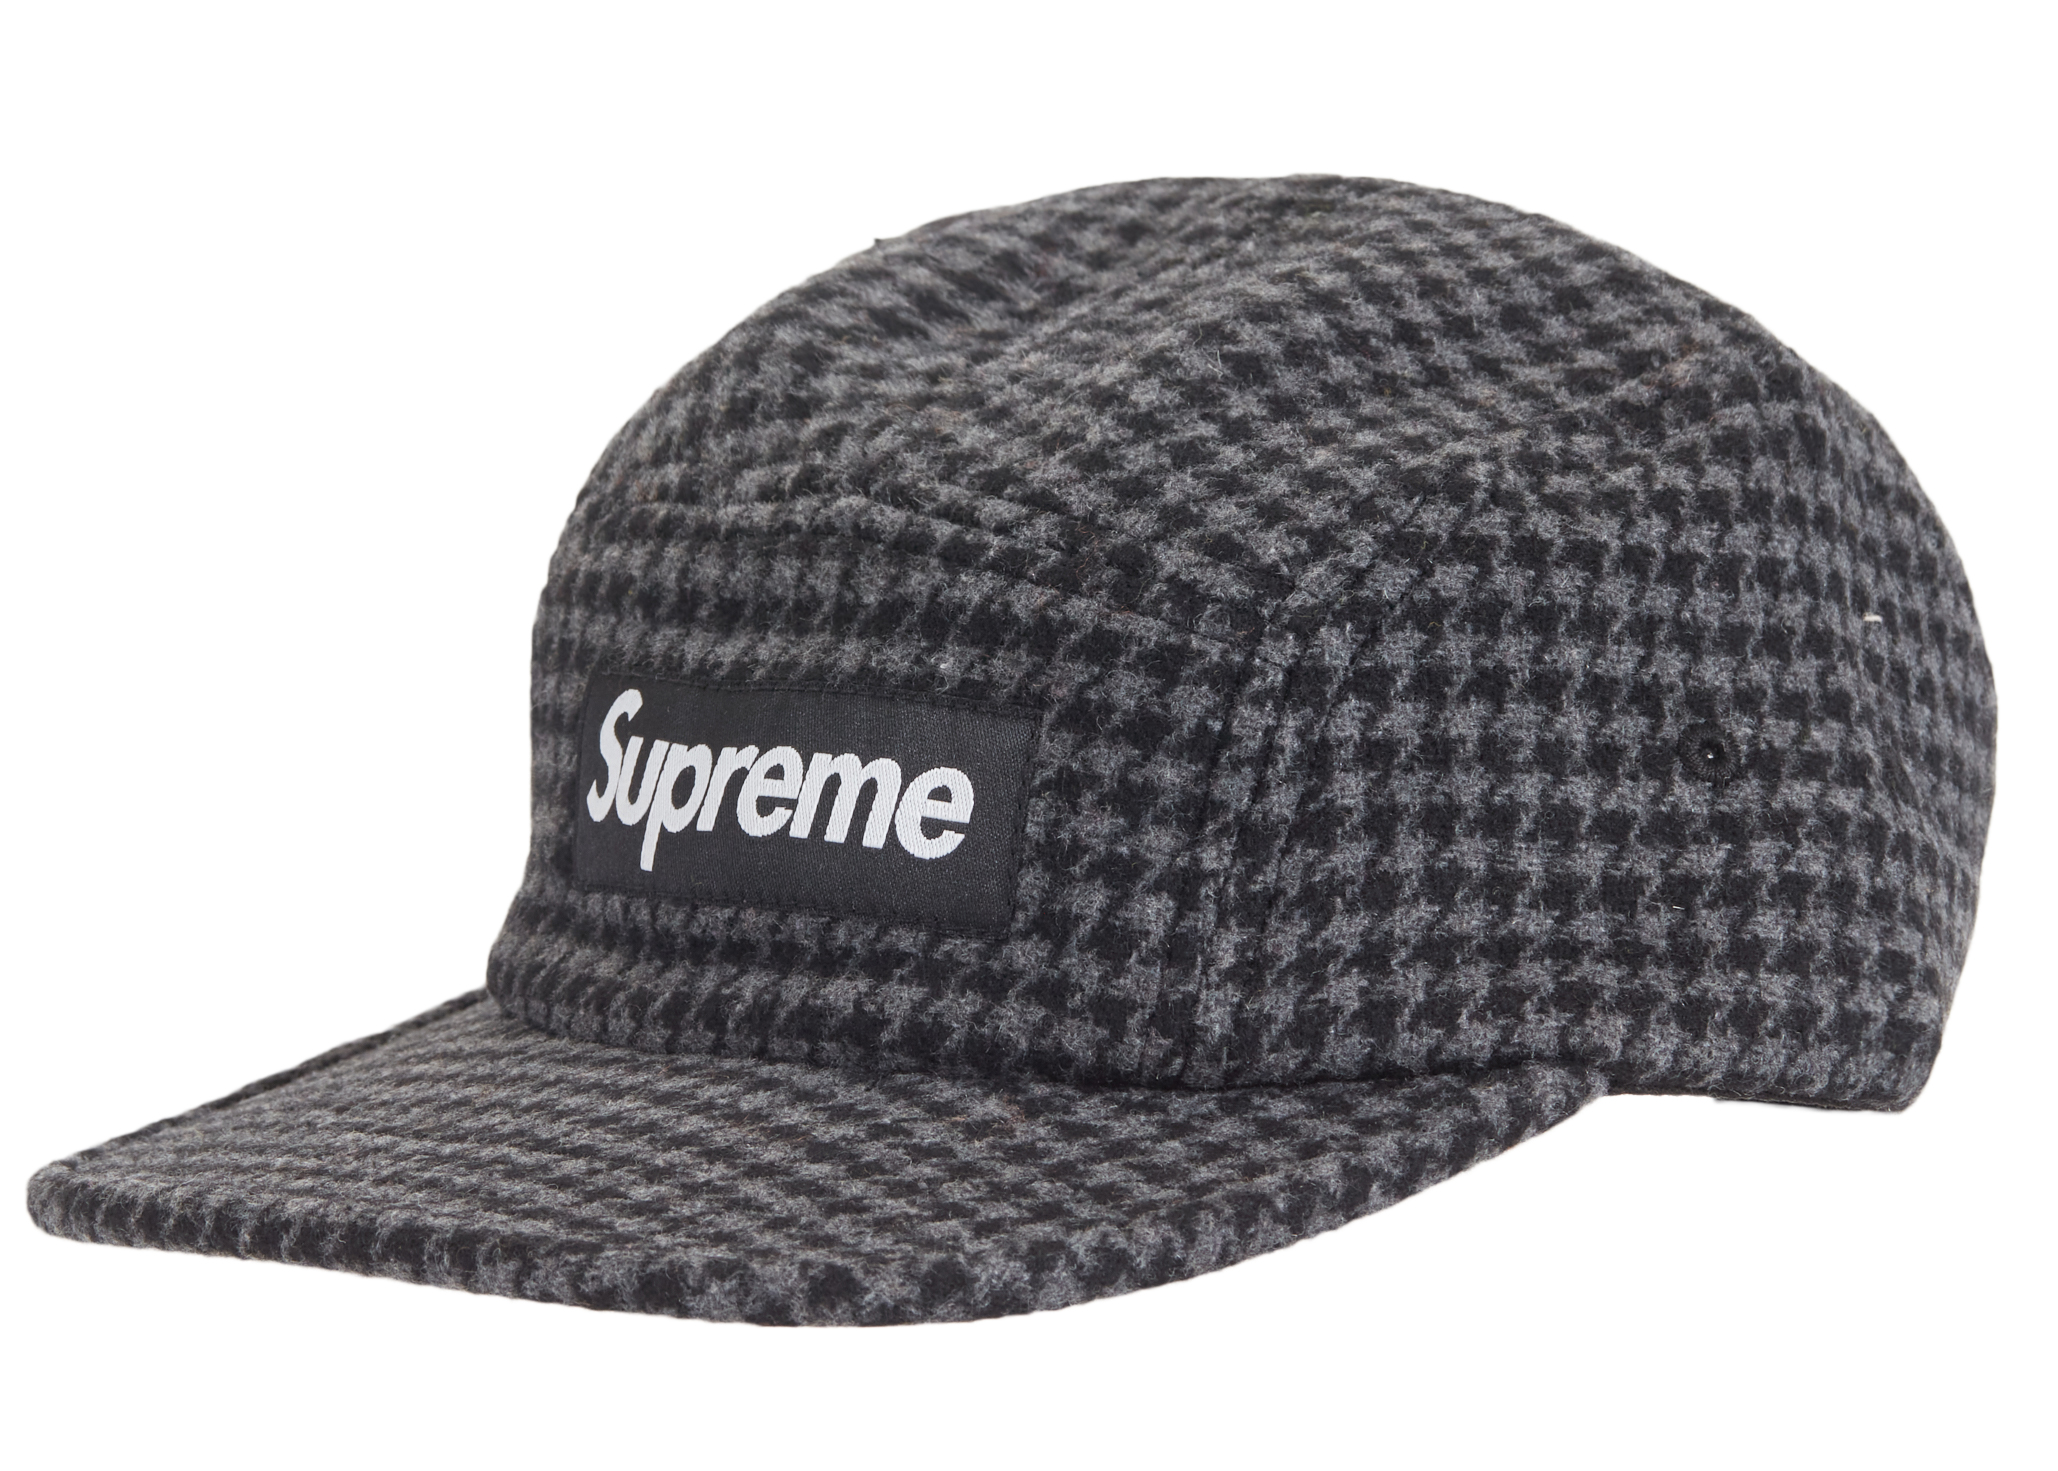 帽子Supreme Wool Camp Cap Black 新品